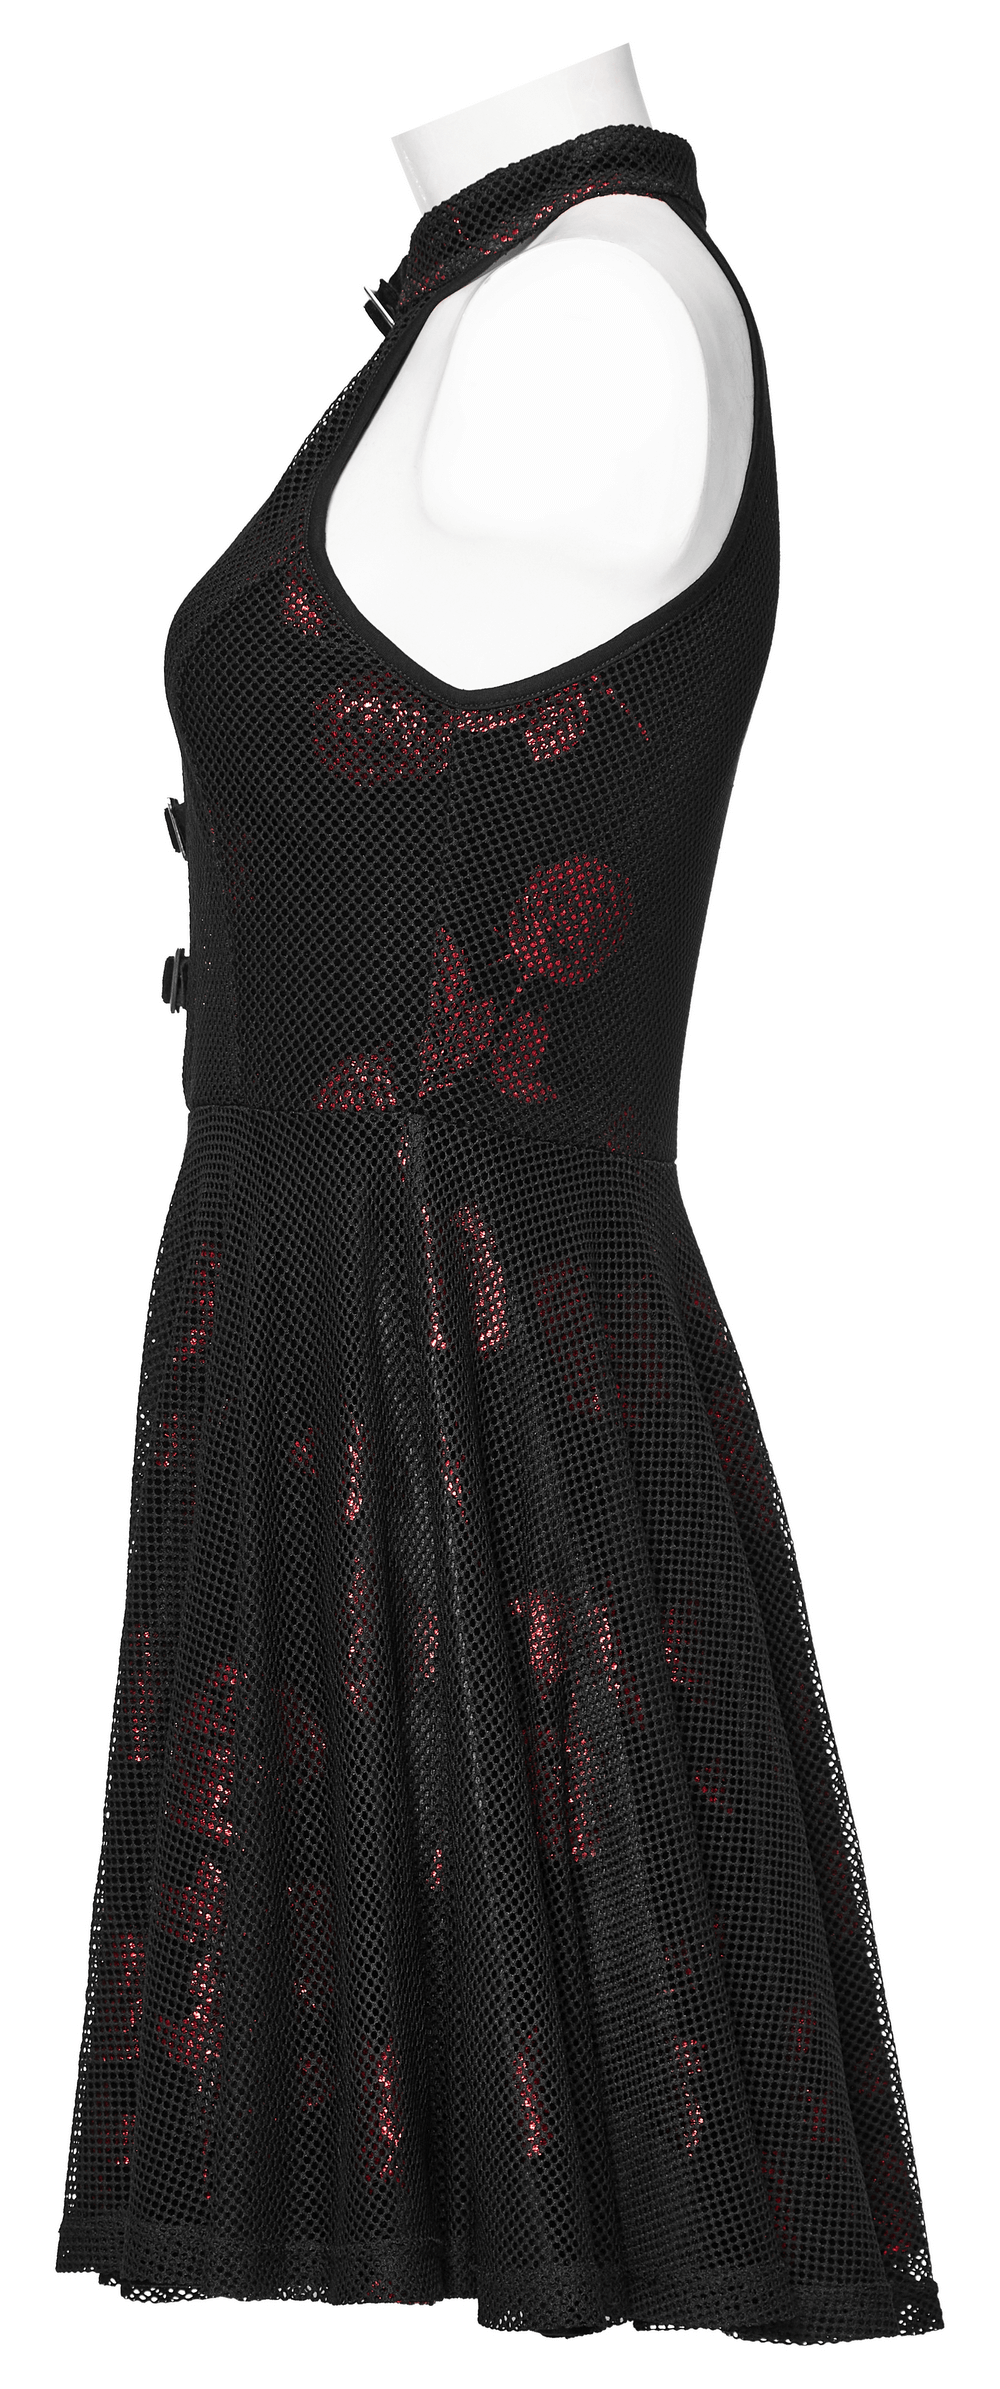 Goth Velvet Rose Print Dress with Buckles Detail